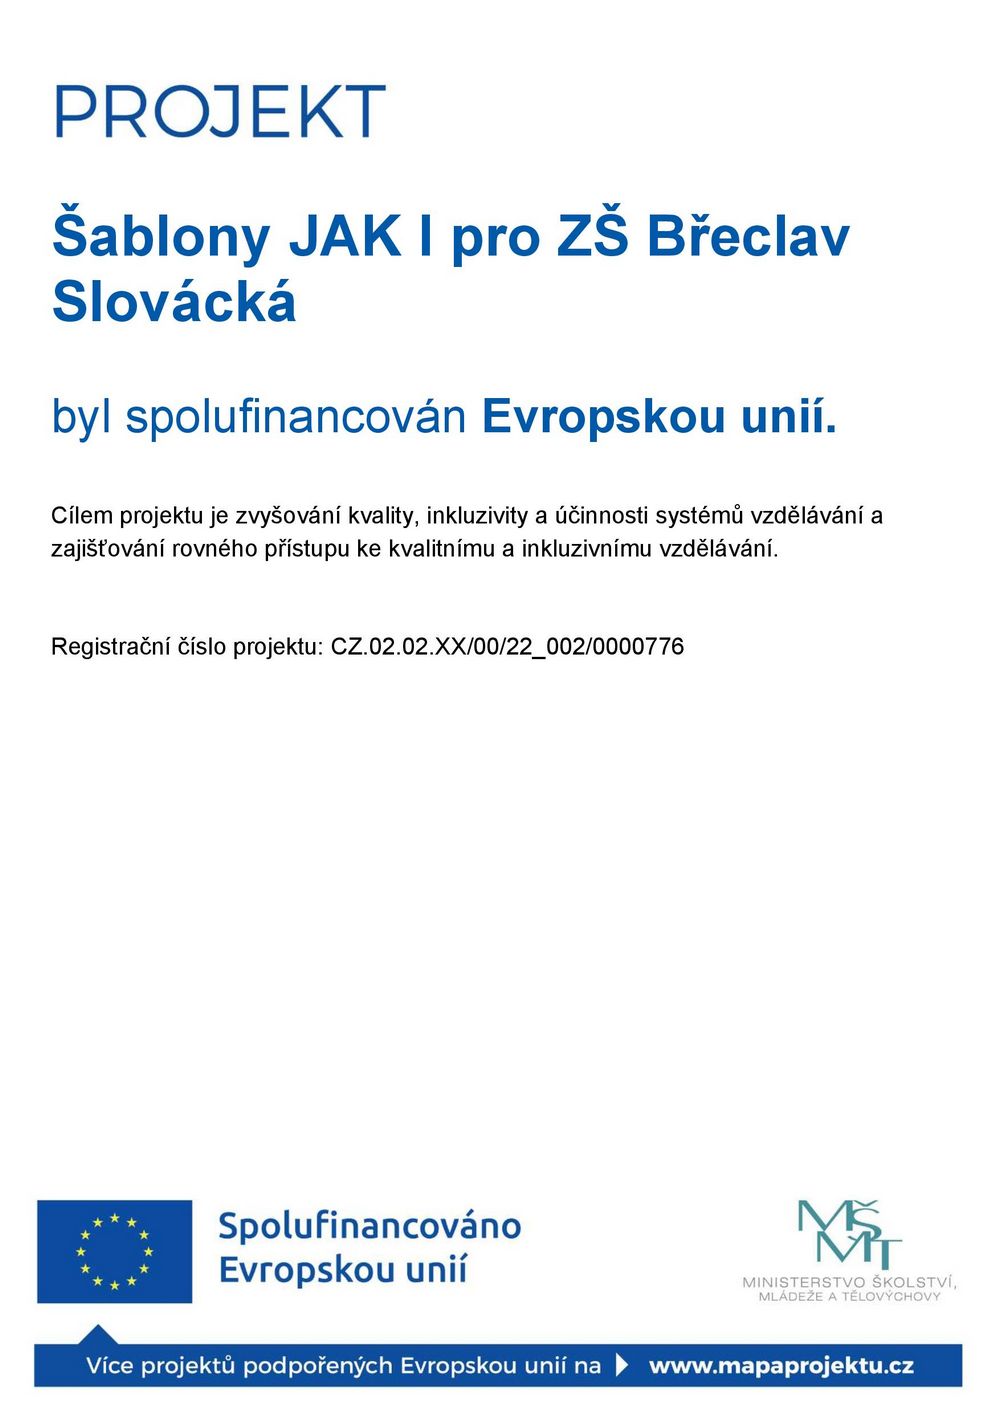 2023 projekt sablony JAK I pro ZS Breclav